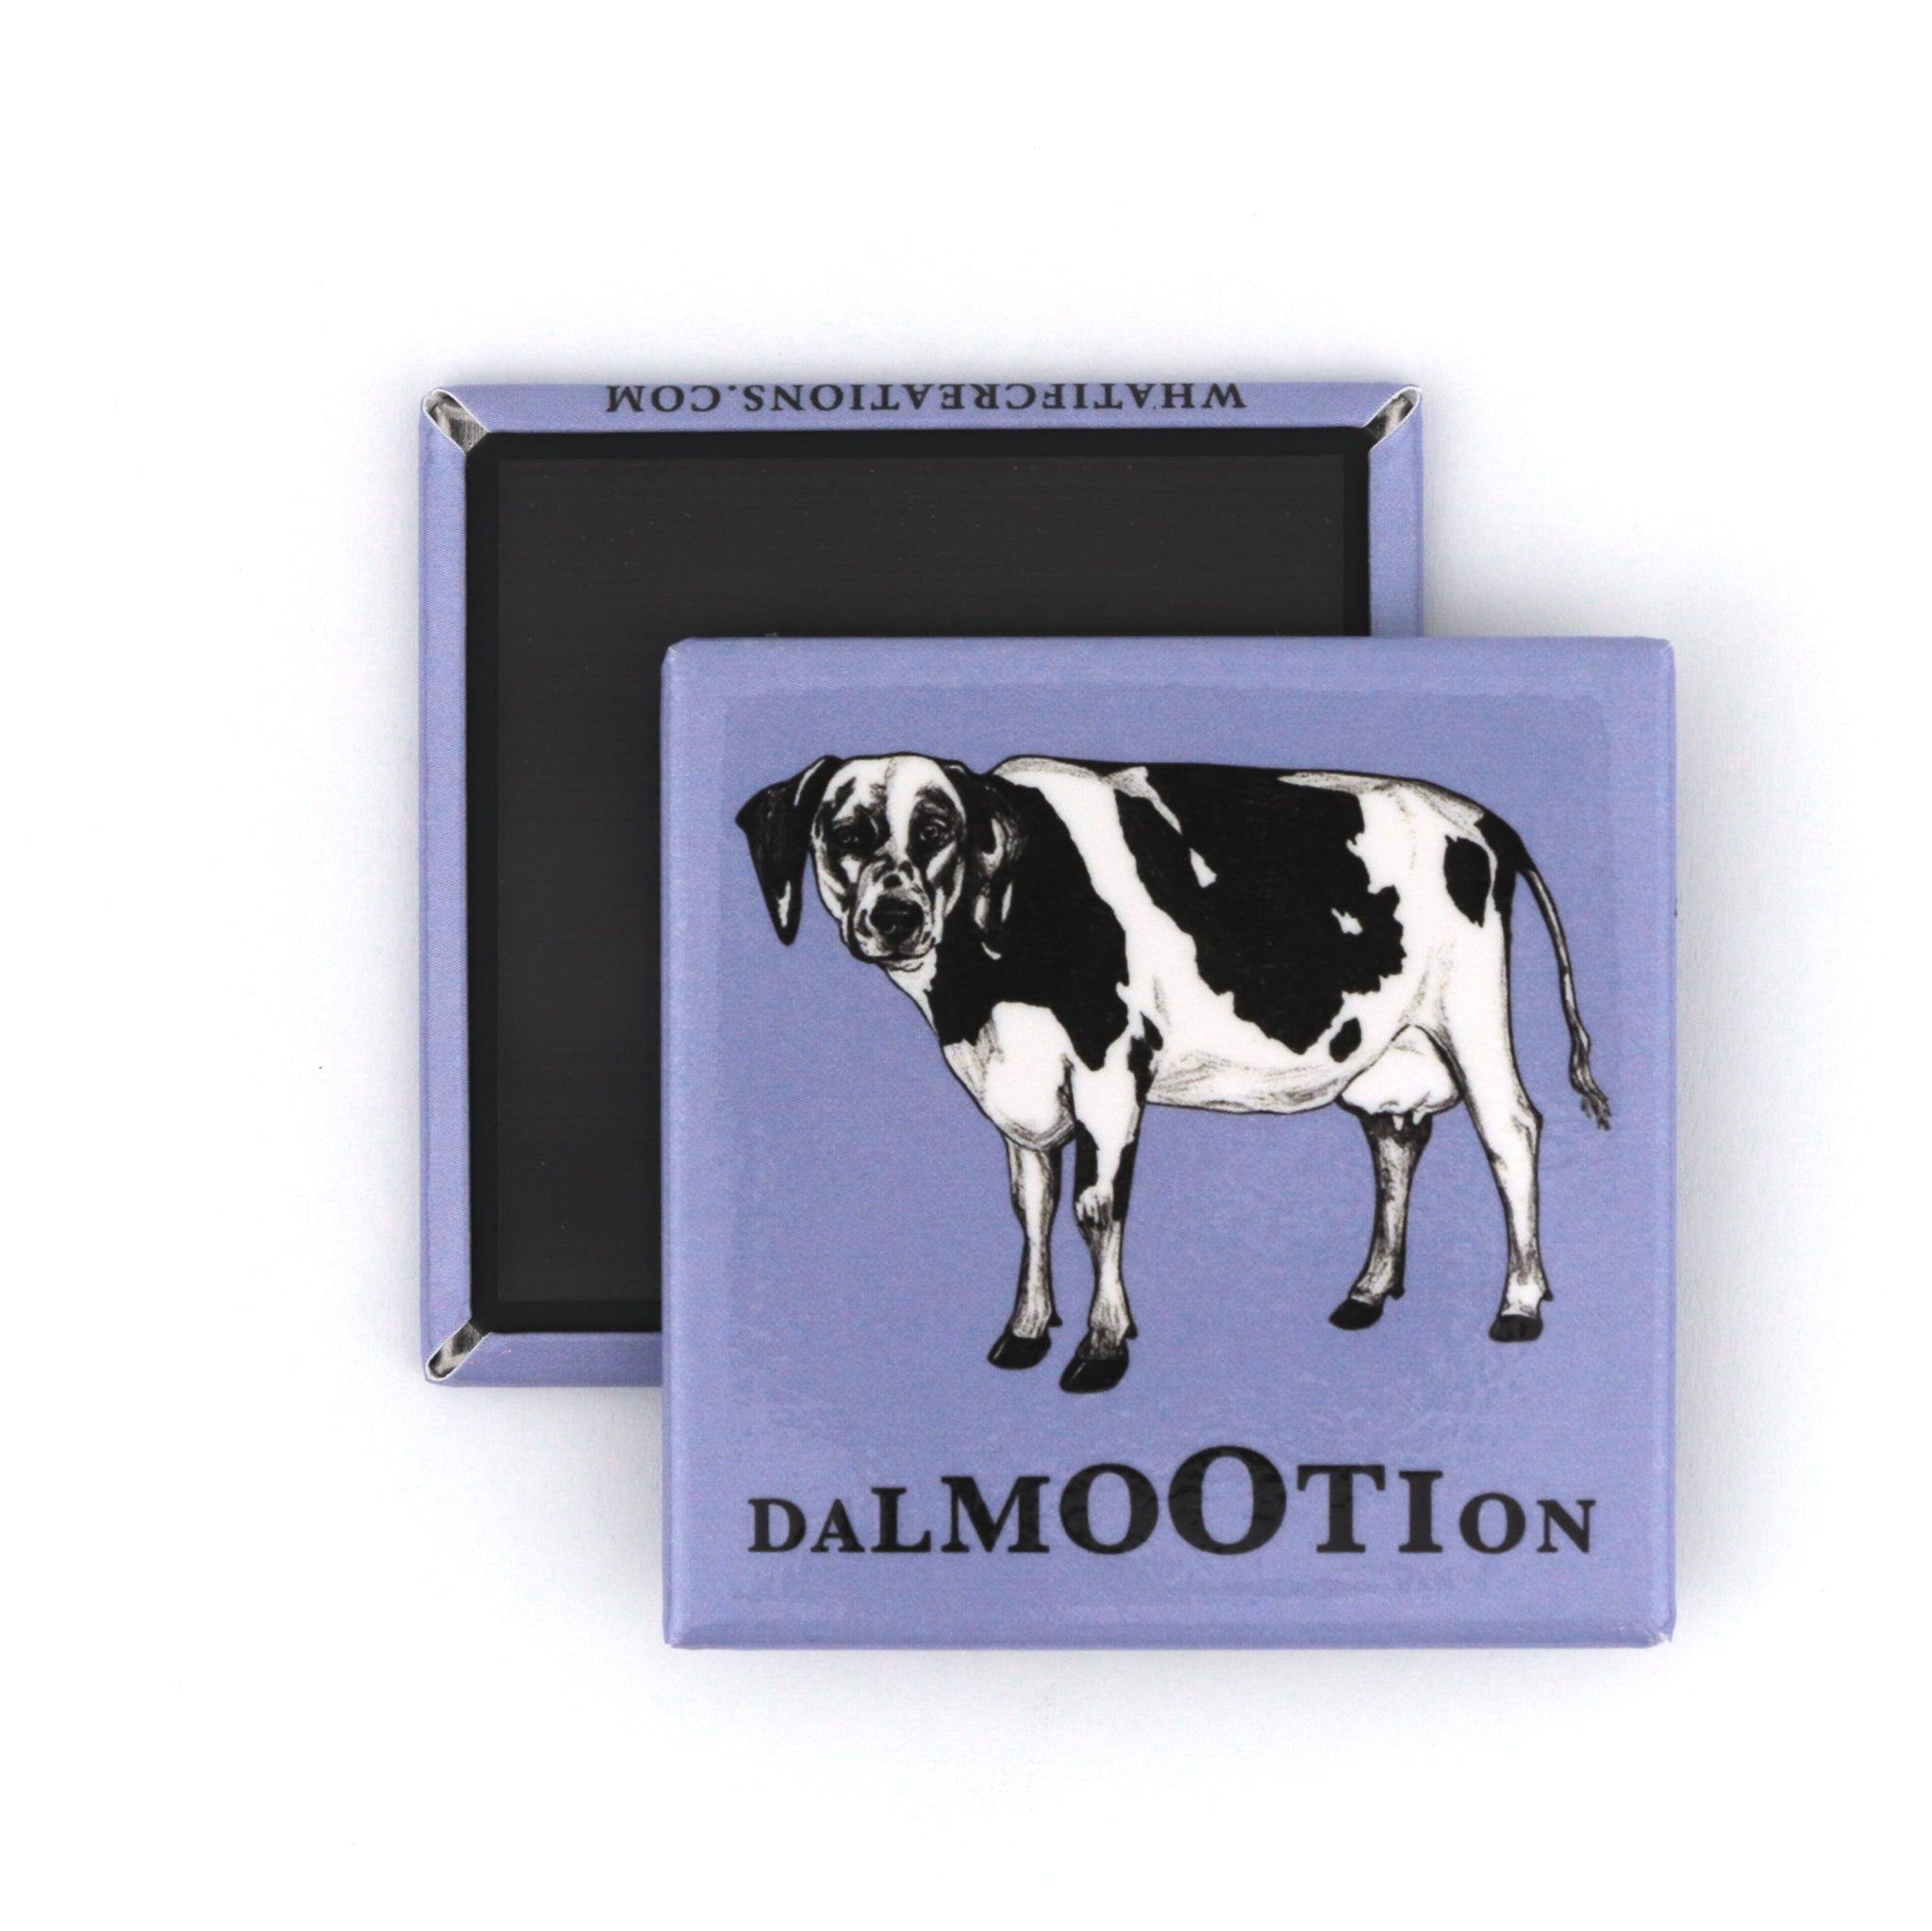 Dalmootion | Dalmatian + Cow Hybrid Animal | 2" Fridge Magnet